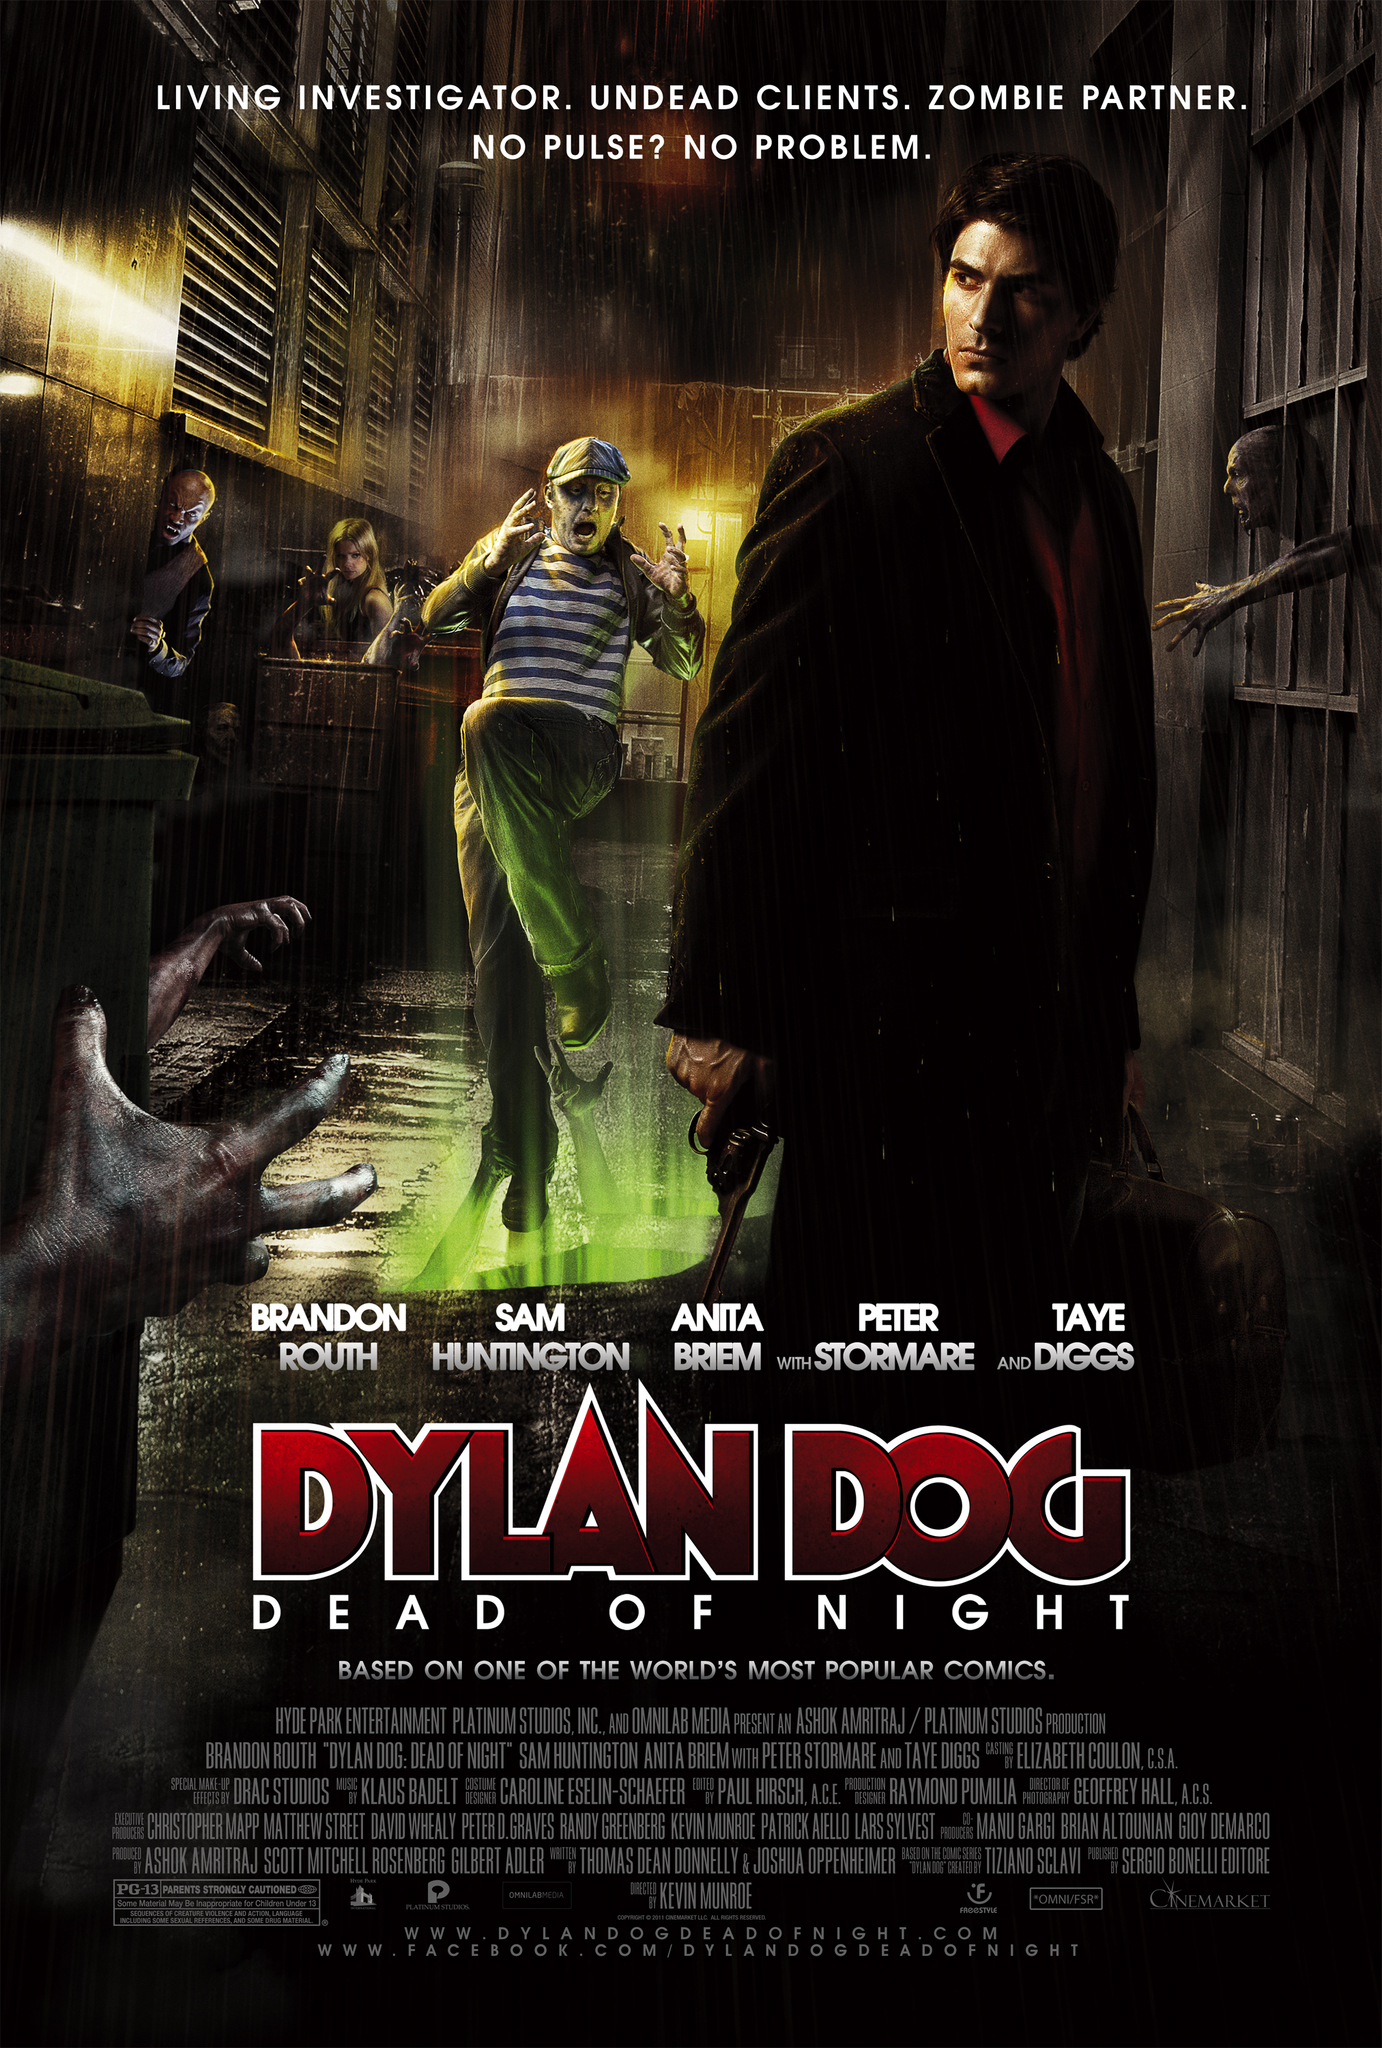 Dylan Dog Dead of Night (2010) ฮีโร่รัตติกาล ถล่มมารหมู่อสูร Brandon Routh